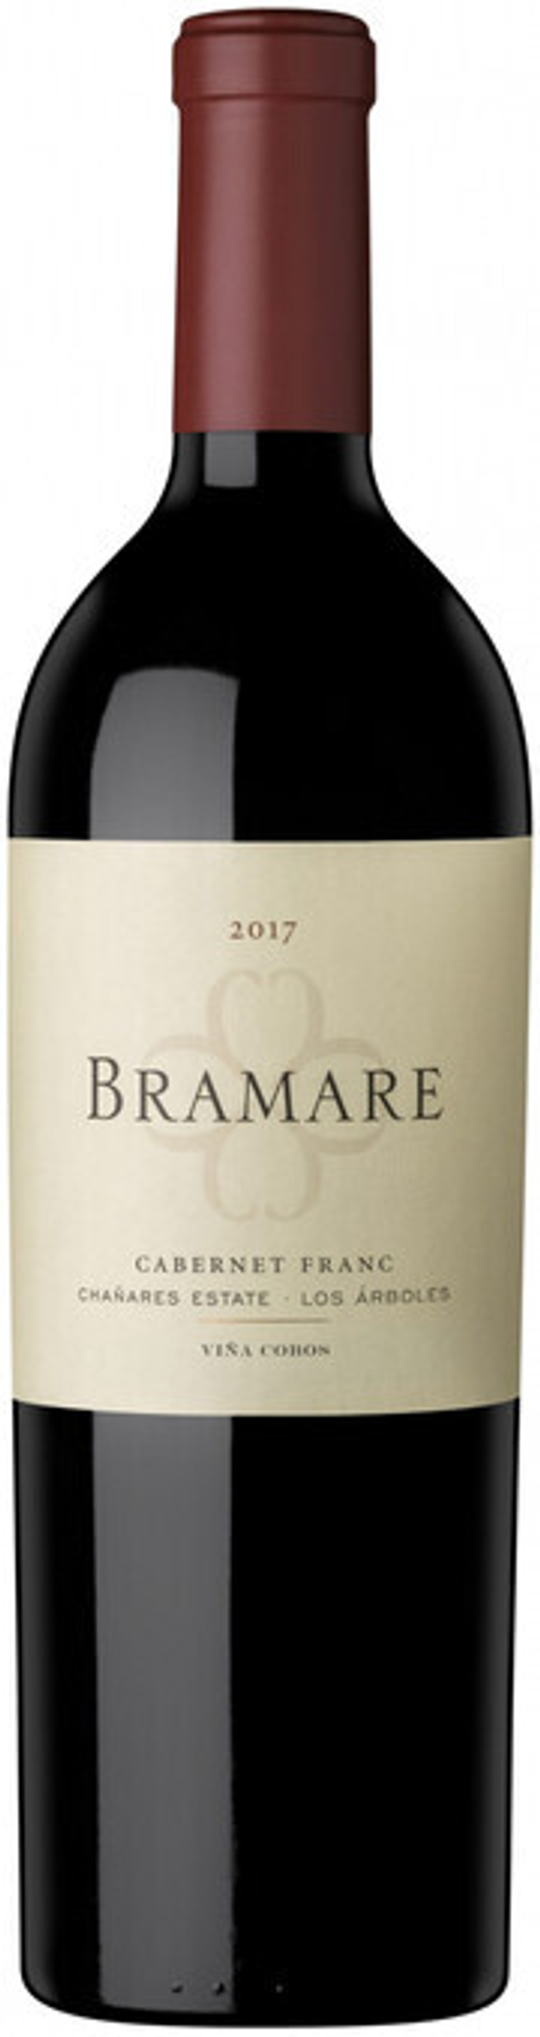 Вино Vina Cobos Bramare Cabernet Frank Chanares Estate, 0,75 л.